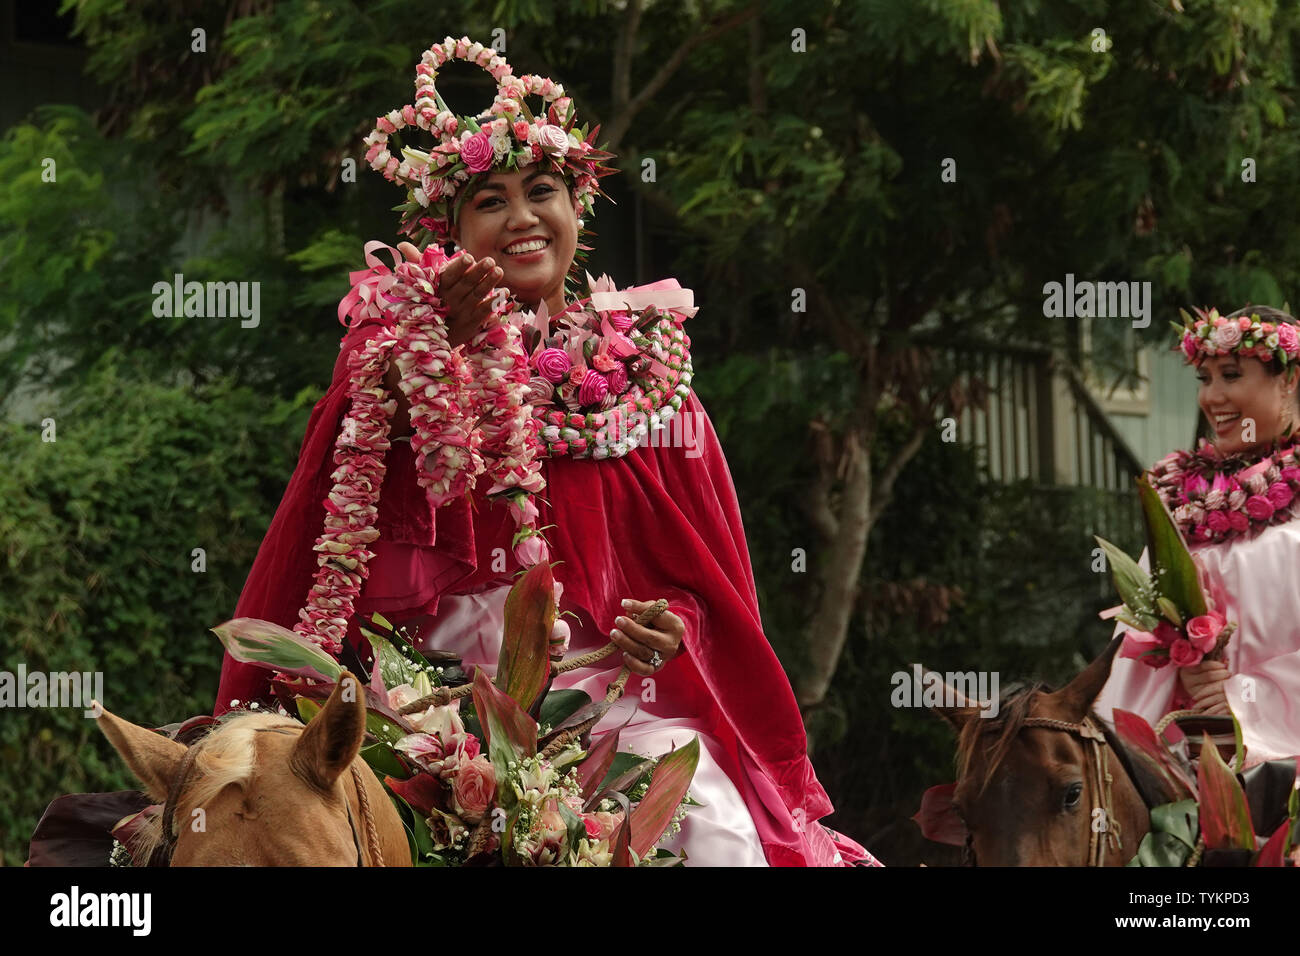 Lihue, Kauai, Hawaii / USA - June 9, 2018: The Princess of Maui representative in the King Kamehameha Day Floral Parade of Kauai is shown. Stock Photo